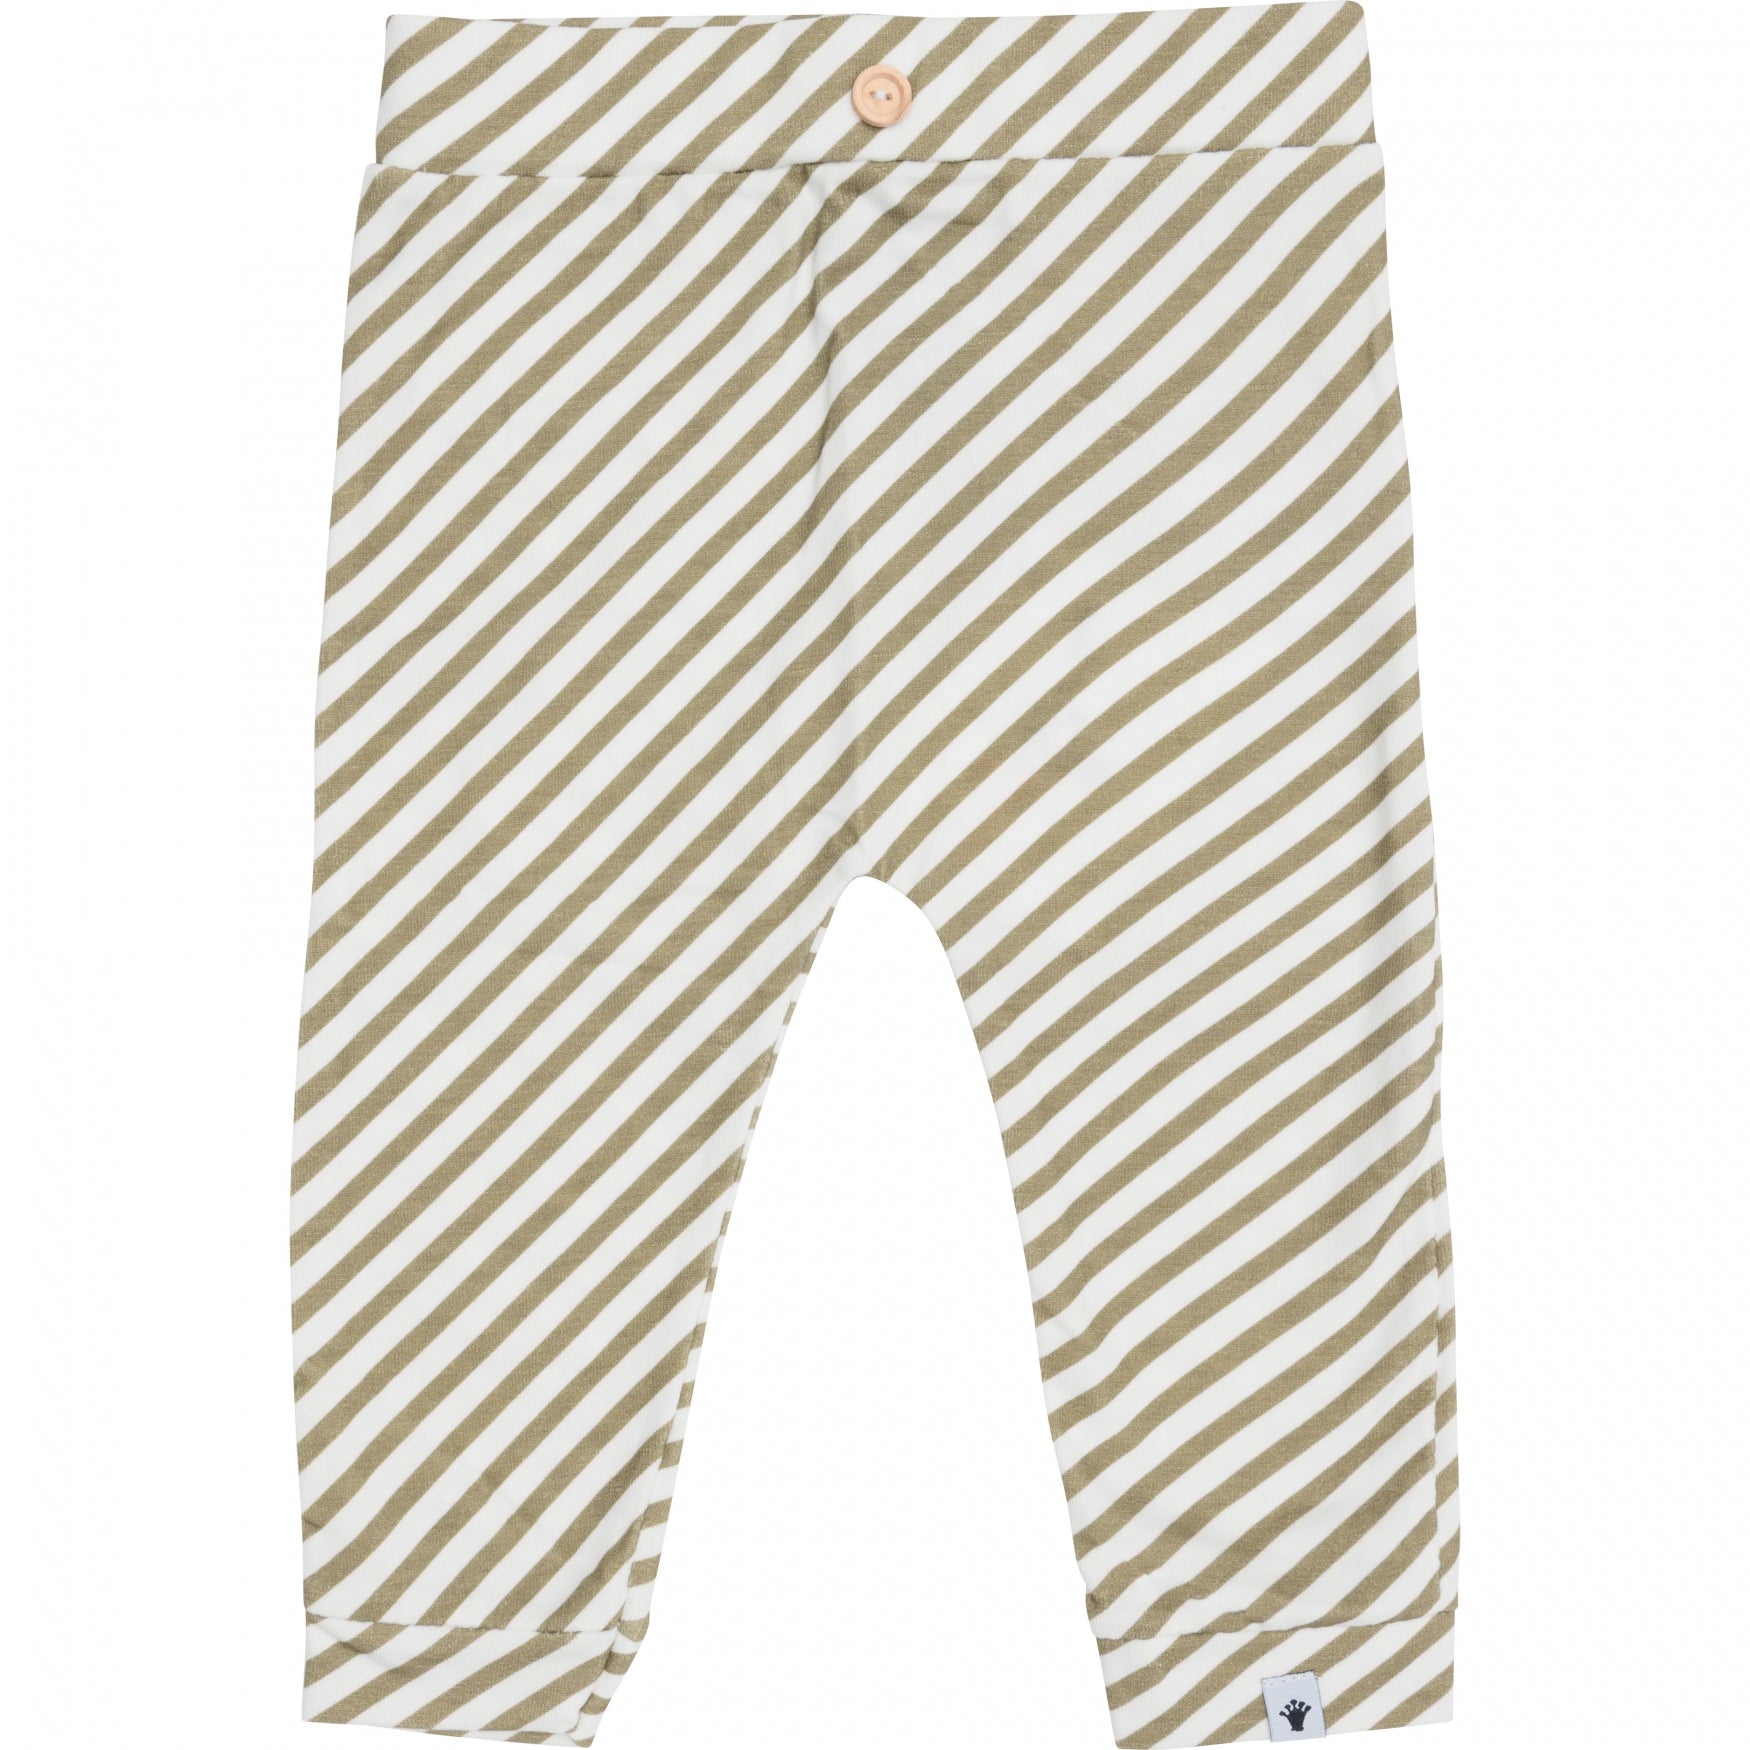 Jongens Trousers van Klein Baby in de kleur Stripe Off White/Twill in maat 74.